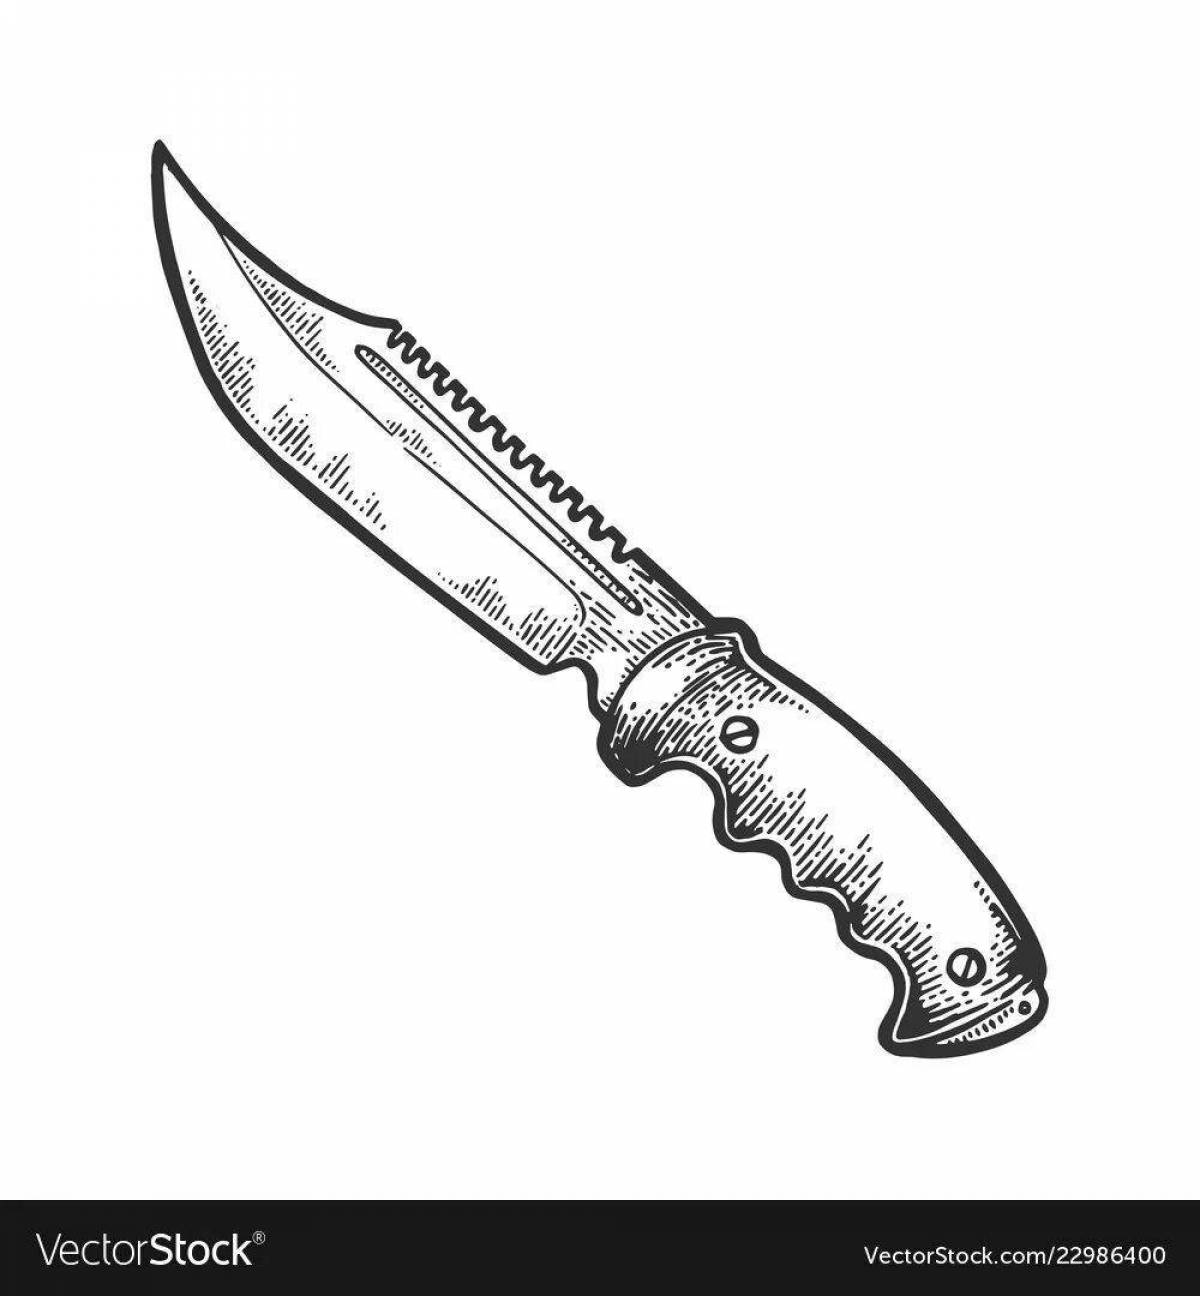 Scorpion knife #2